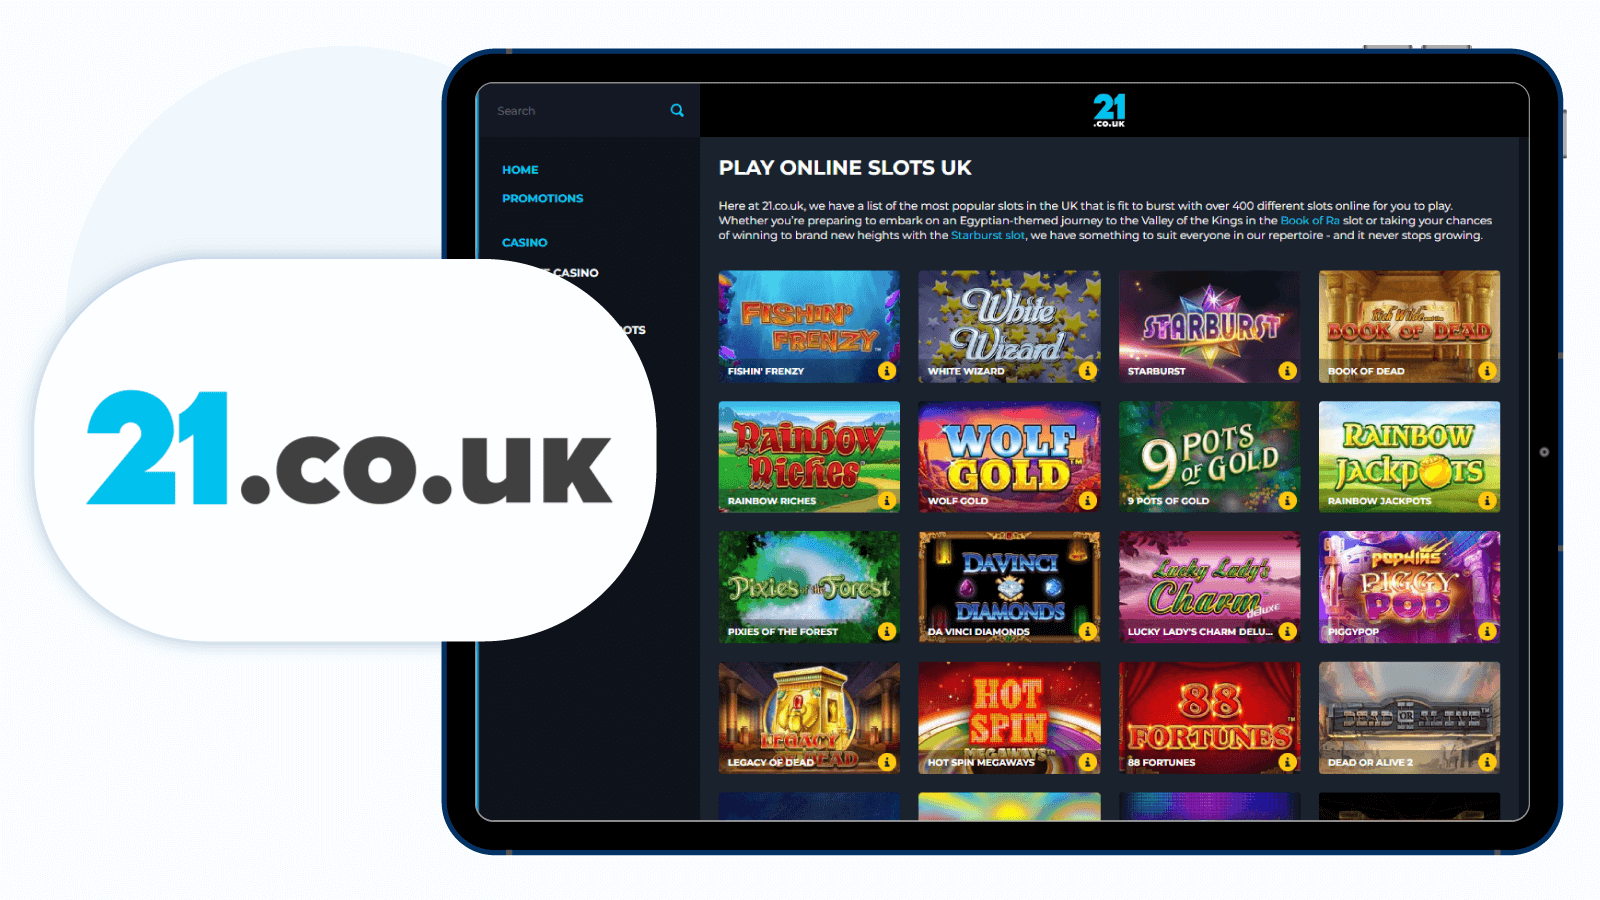 21.co.uk Casino – Best Mobile Casino App for Microgaming Slots